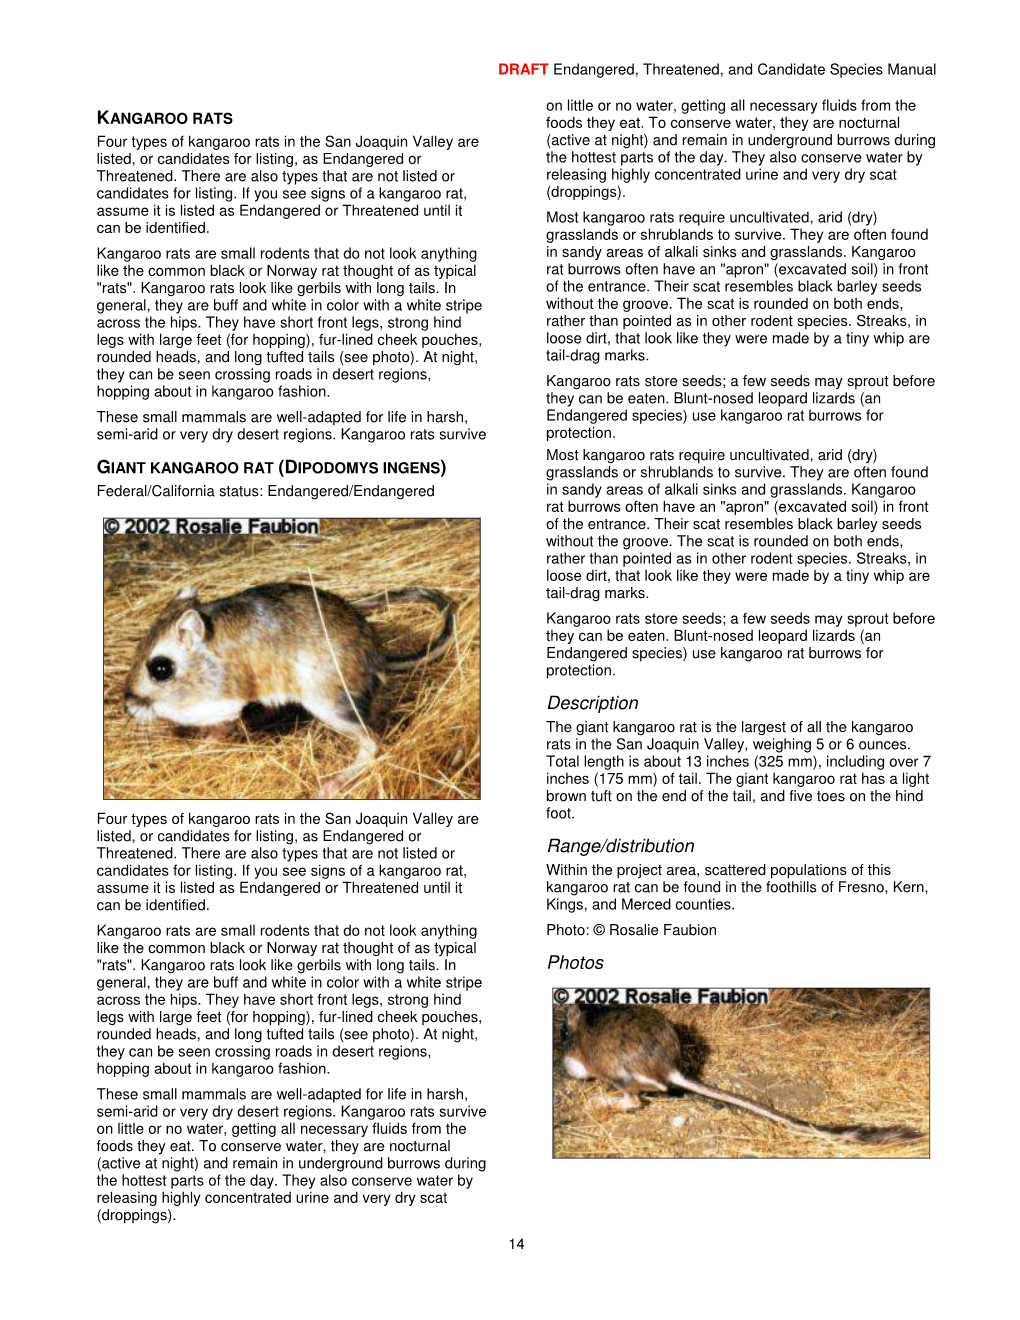 GIANT KANGAROO RAT (DIPODOMYS INGENS) Grasslands Or Shrublands to Survive